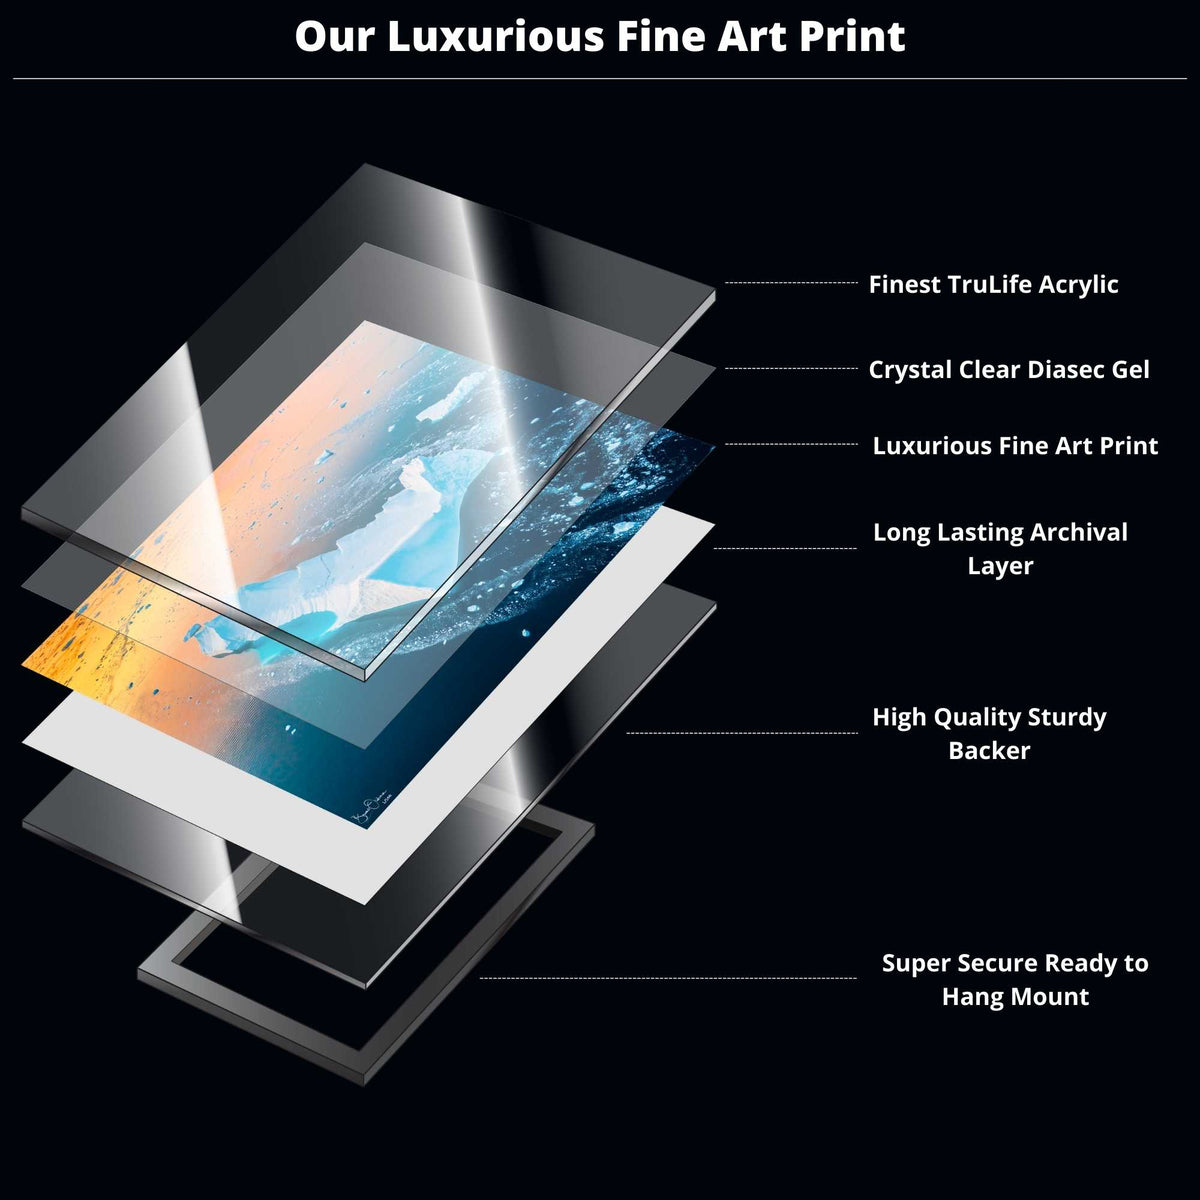 Luxurious Framed Fine Art Print High Quality